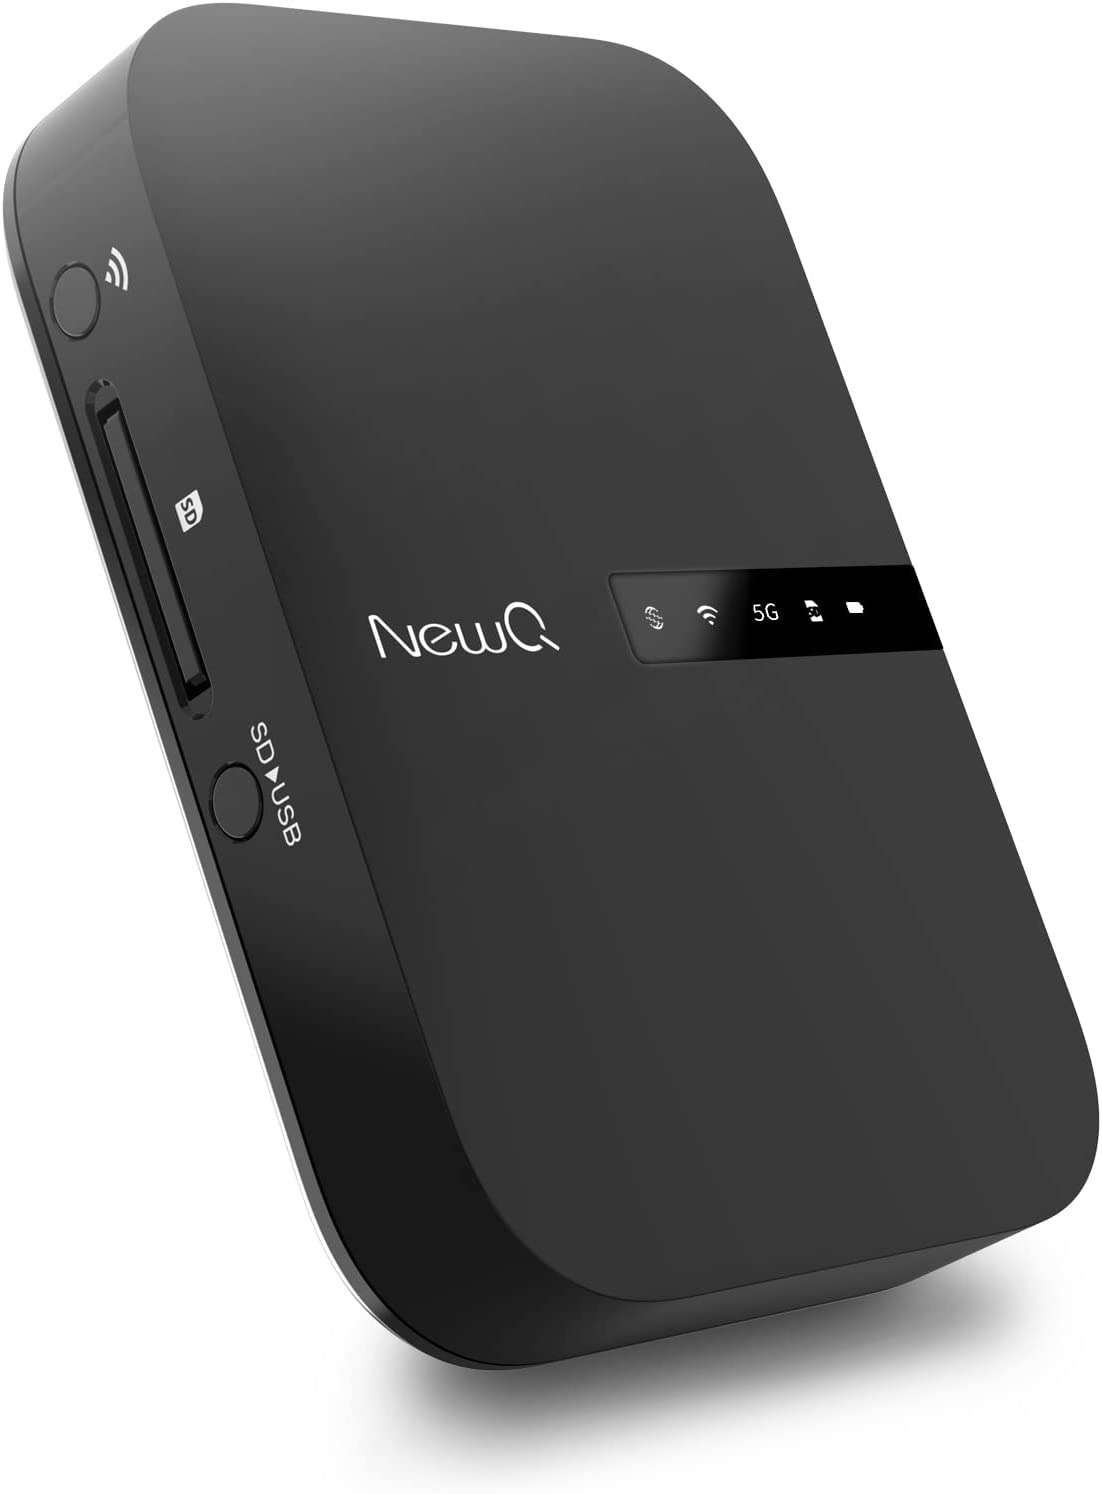 Filehub AC750 Travel Router: Portable Hard Drive SD Card Reader & Mini W...